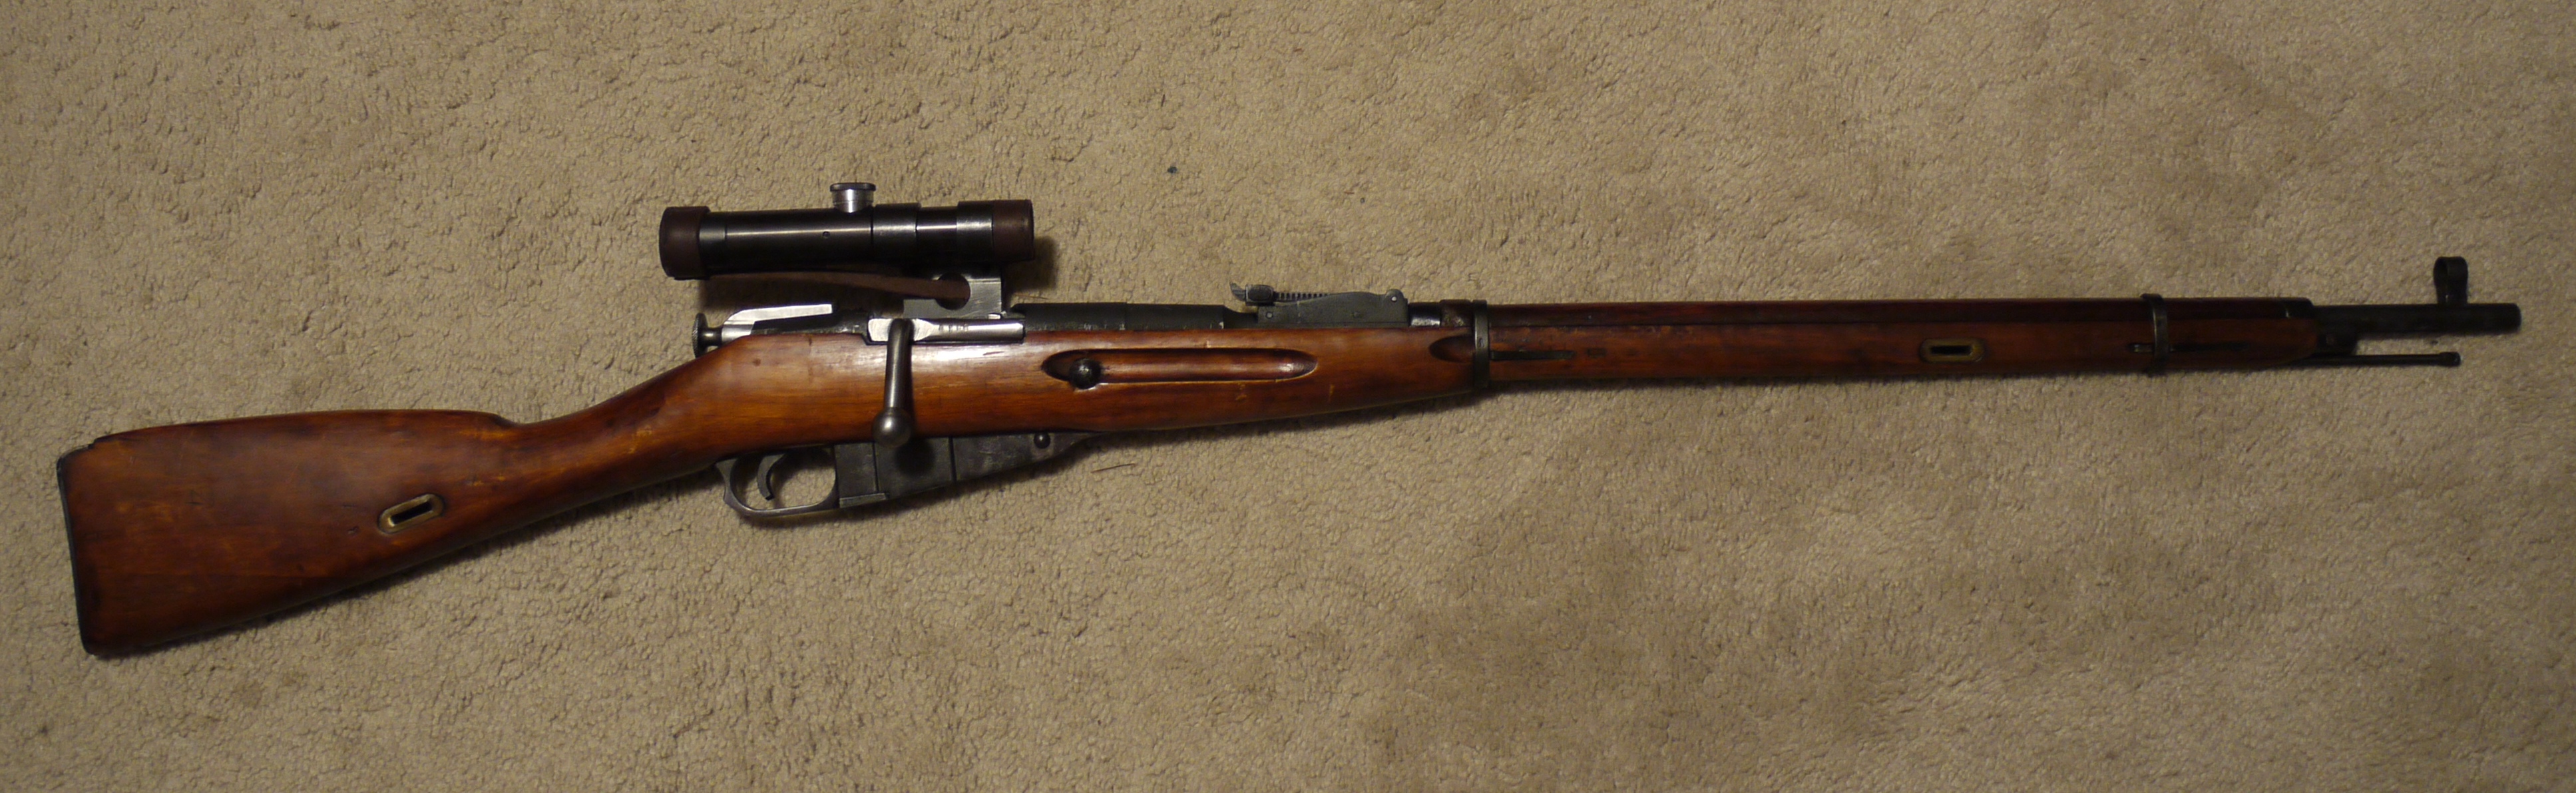 Weapons Mosin Nagant Rifle 3870x1191